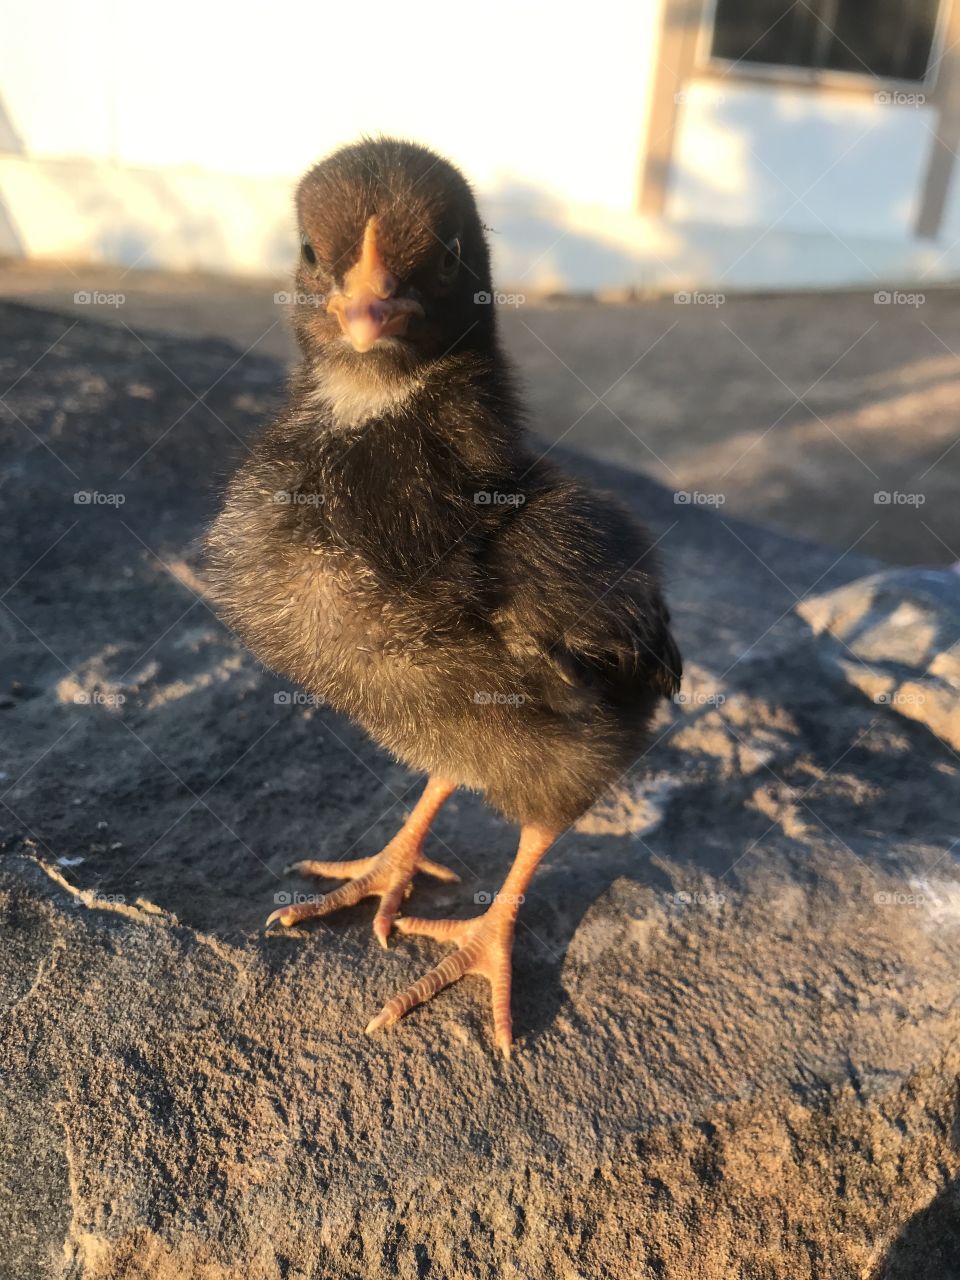 Baby chick 